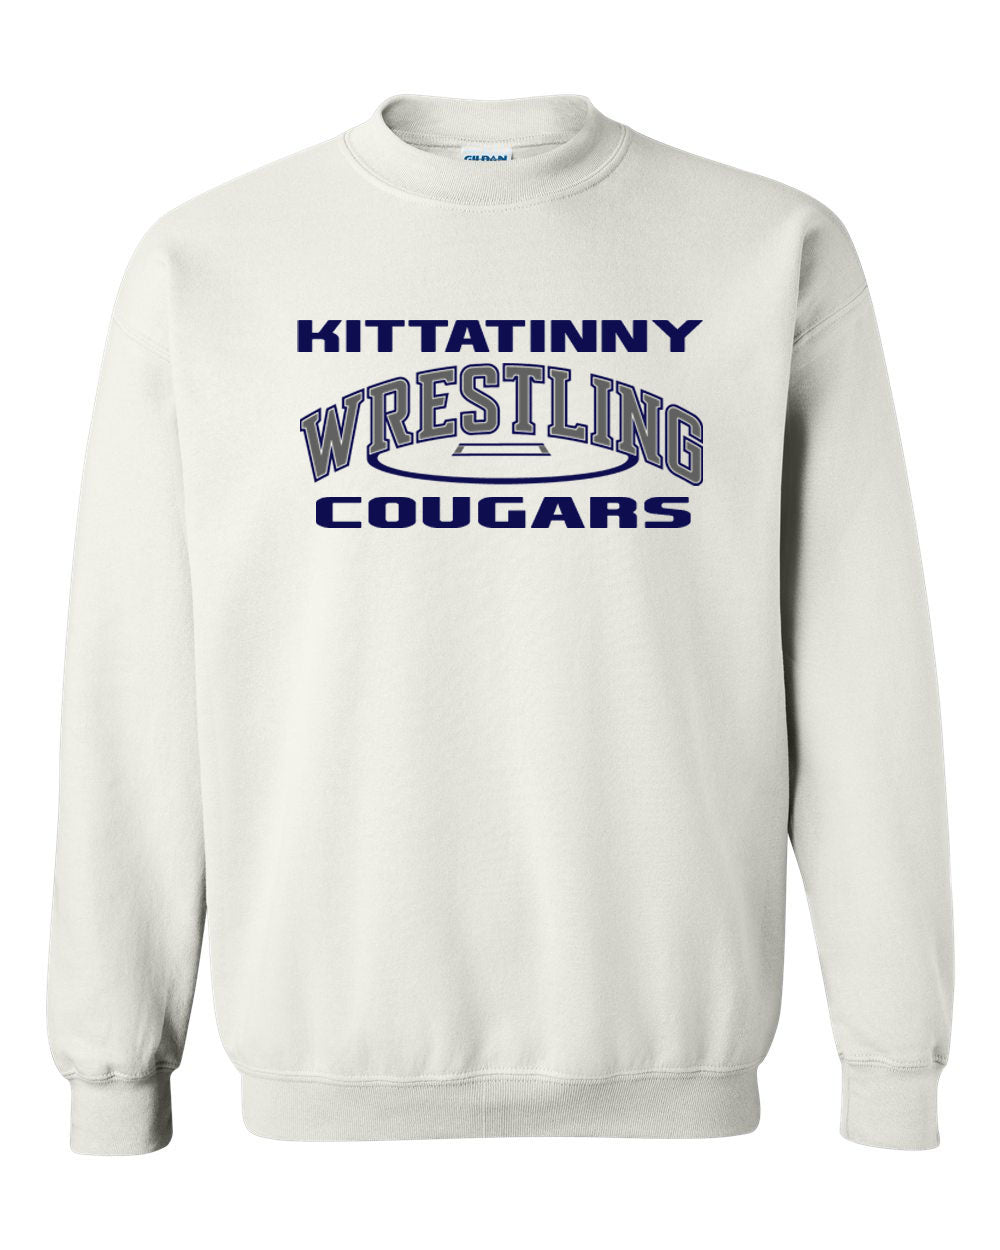 Kittatinny Wrestling Design 3 non hooded sweatshirt